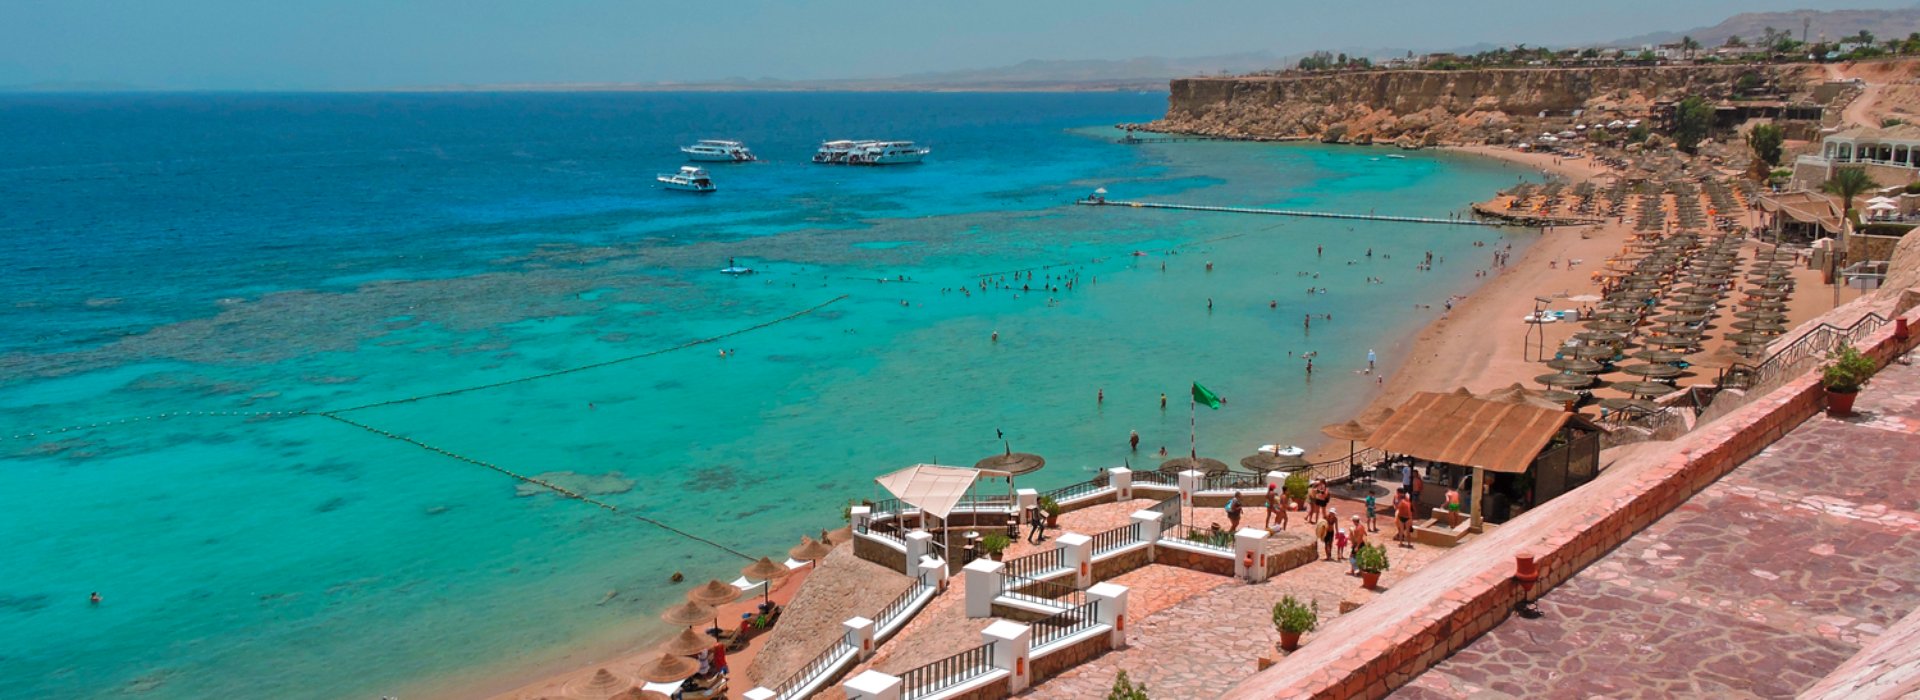 Jaz_Fanara_Resort_Sharm_El_Sheikh_spiaggia2_-tSa-825X450